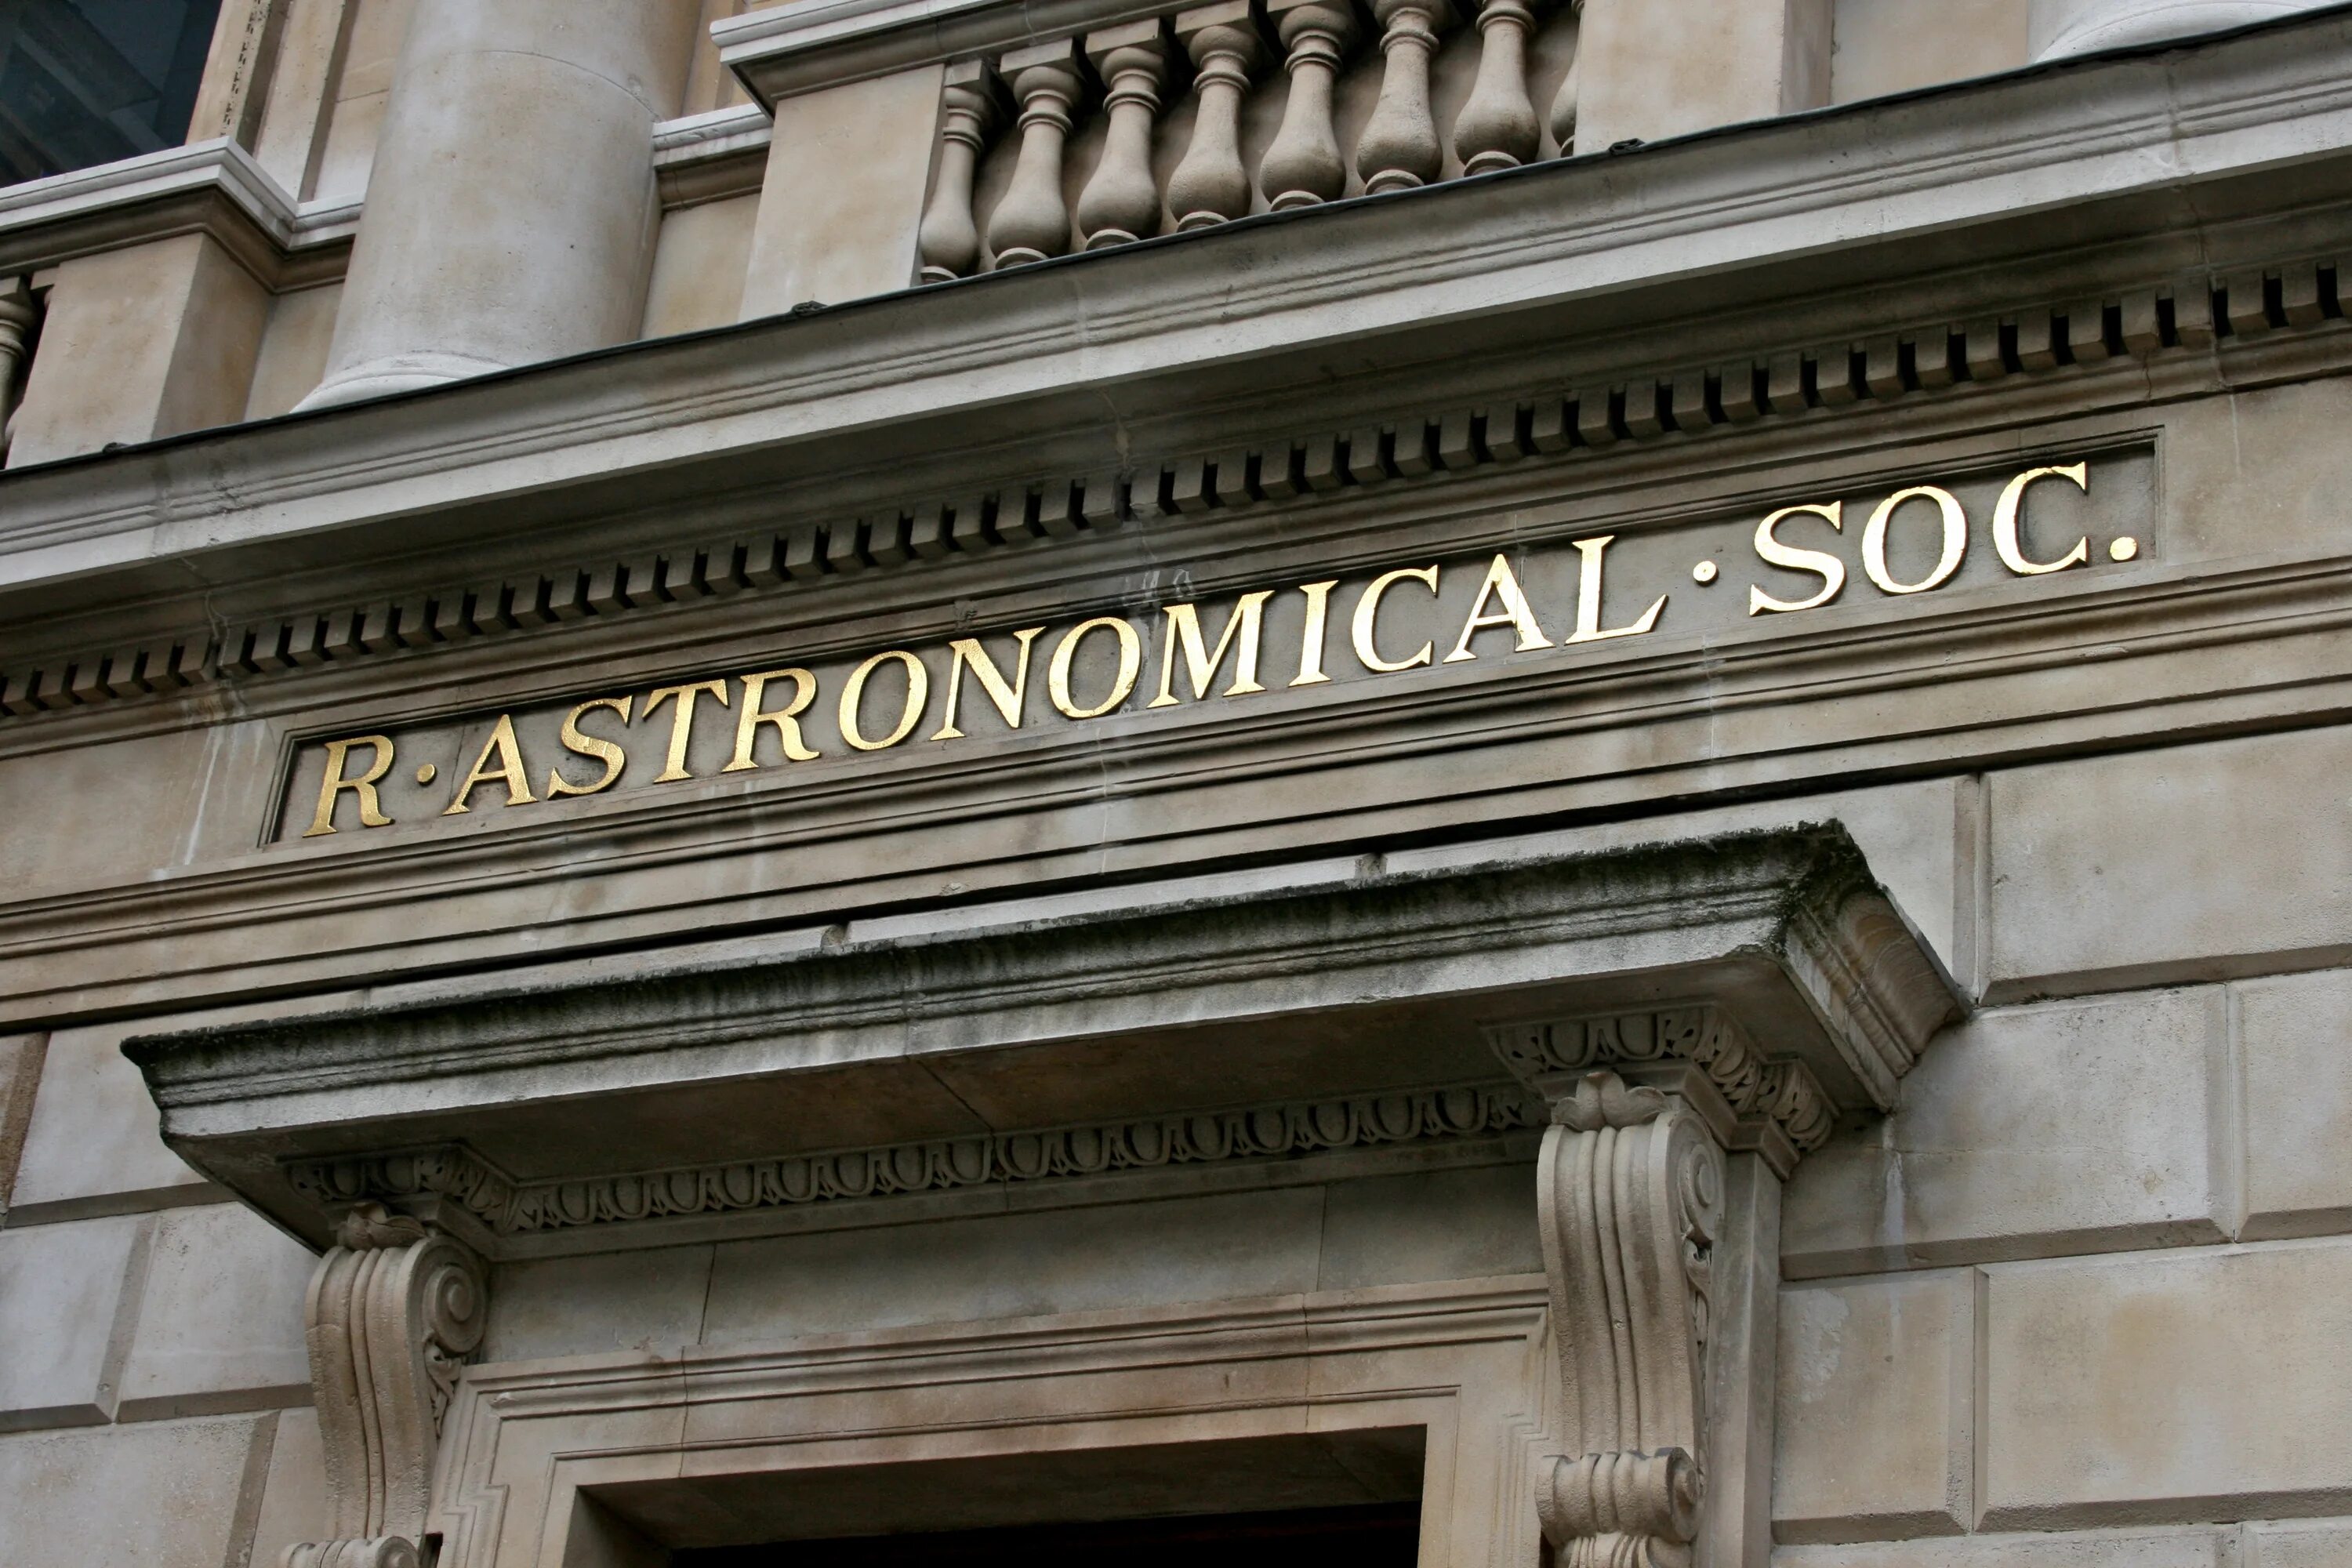 Королевское астрономическое общество. Королевское общество (Royal Society). В Англии основано Королевское астрономическое общество. Лондонское Королевское общество. Royal society